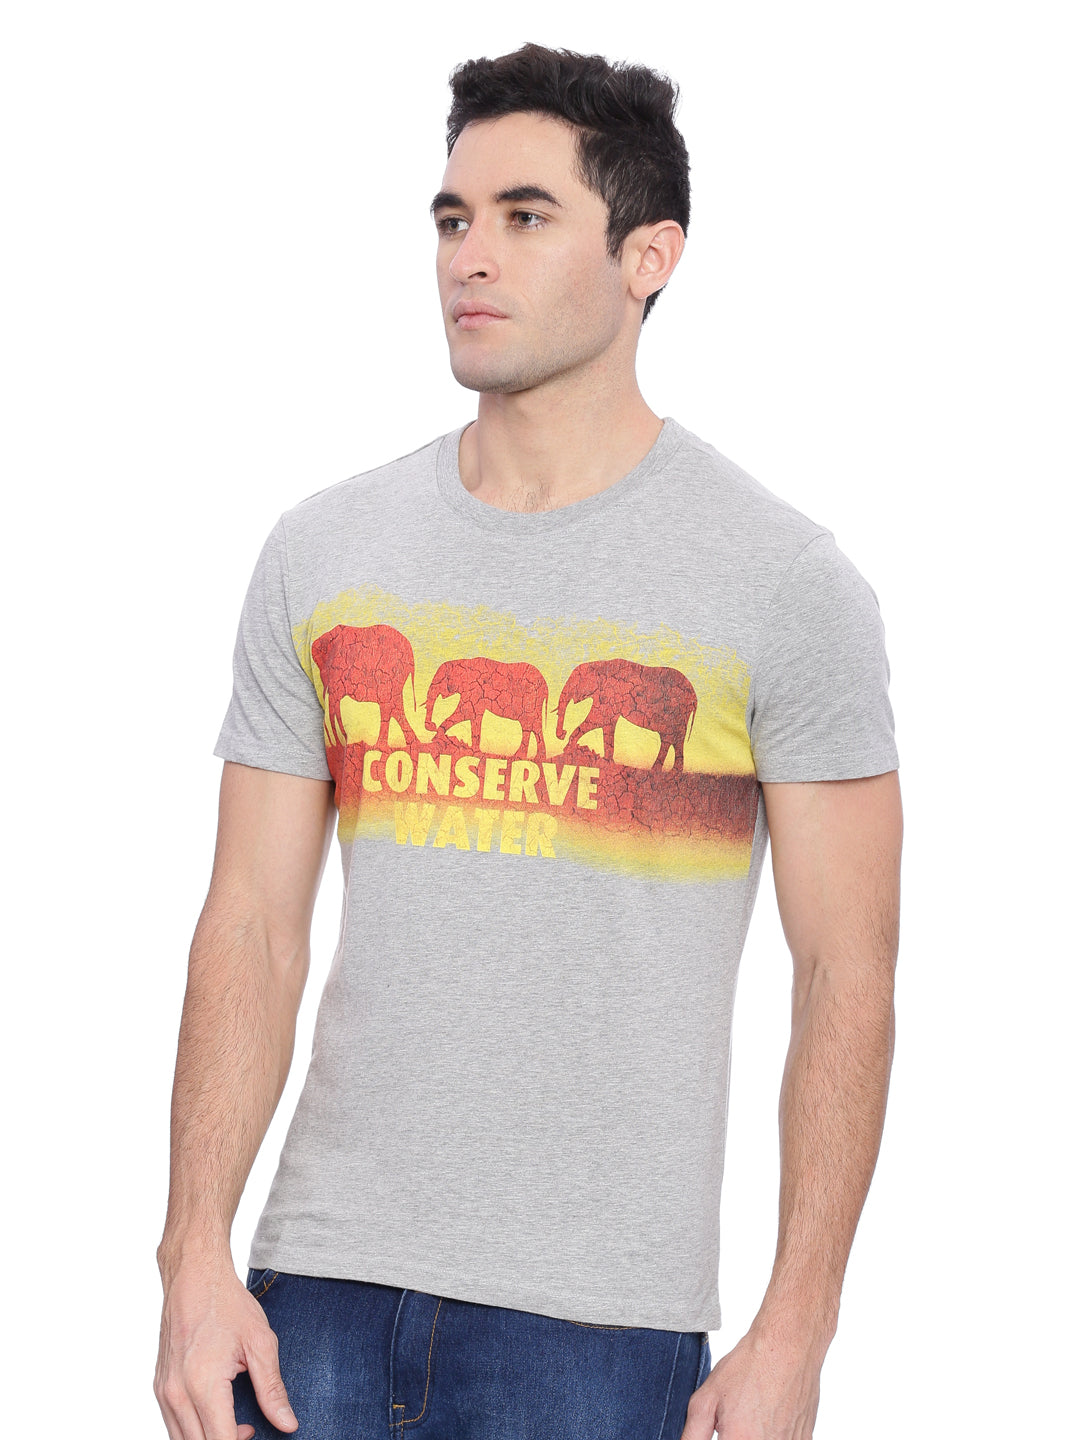 Wolfpack Men Grey Melange Printed Round Neck T-Shirt Wolfpack